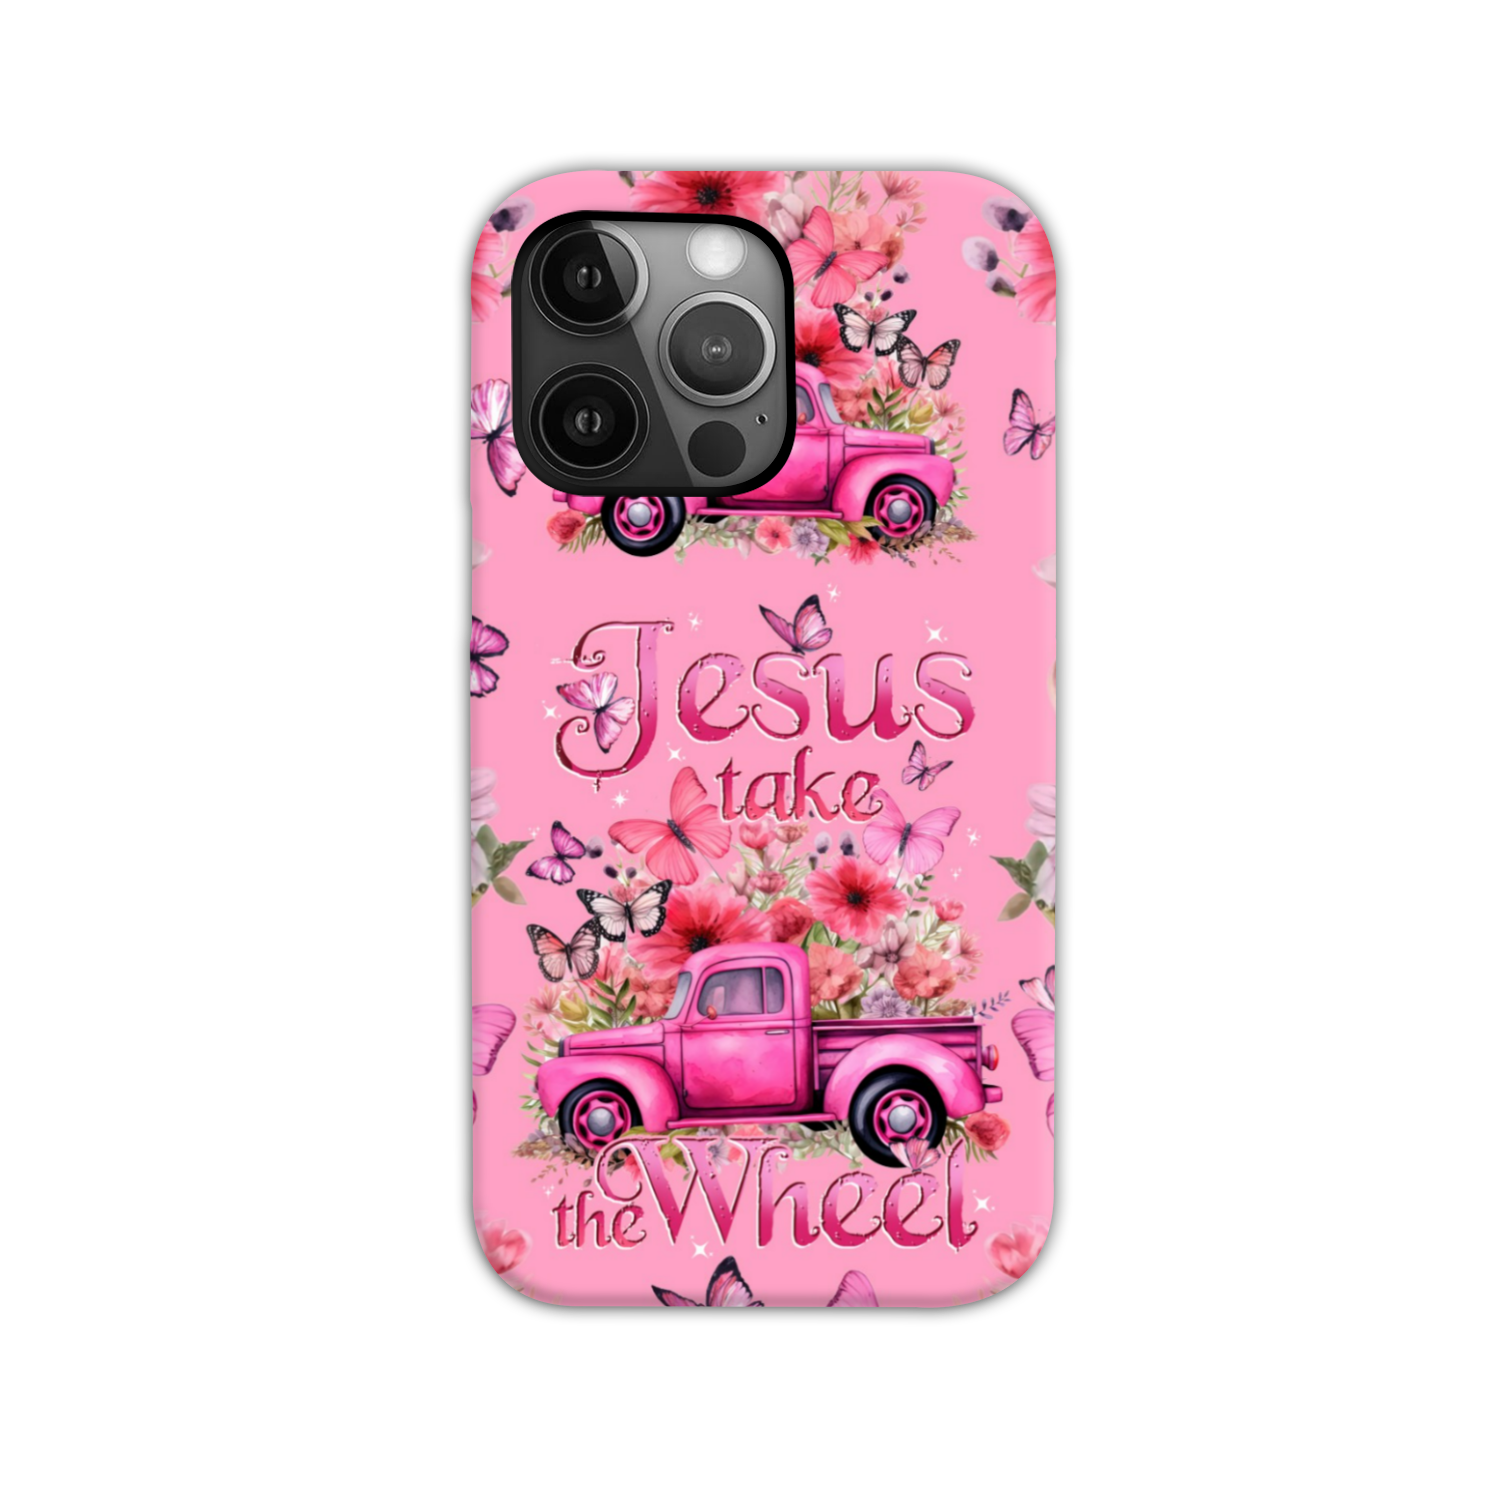 Jesus Take The Wheel Phone Case - Tytd040124